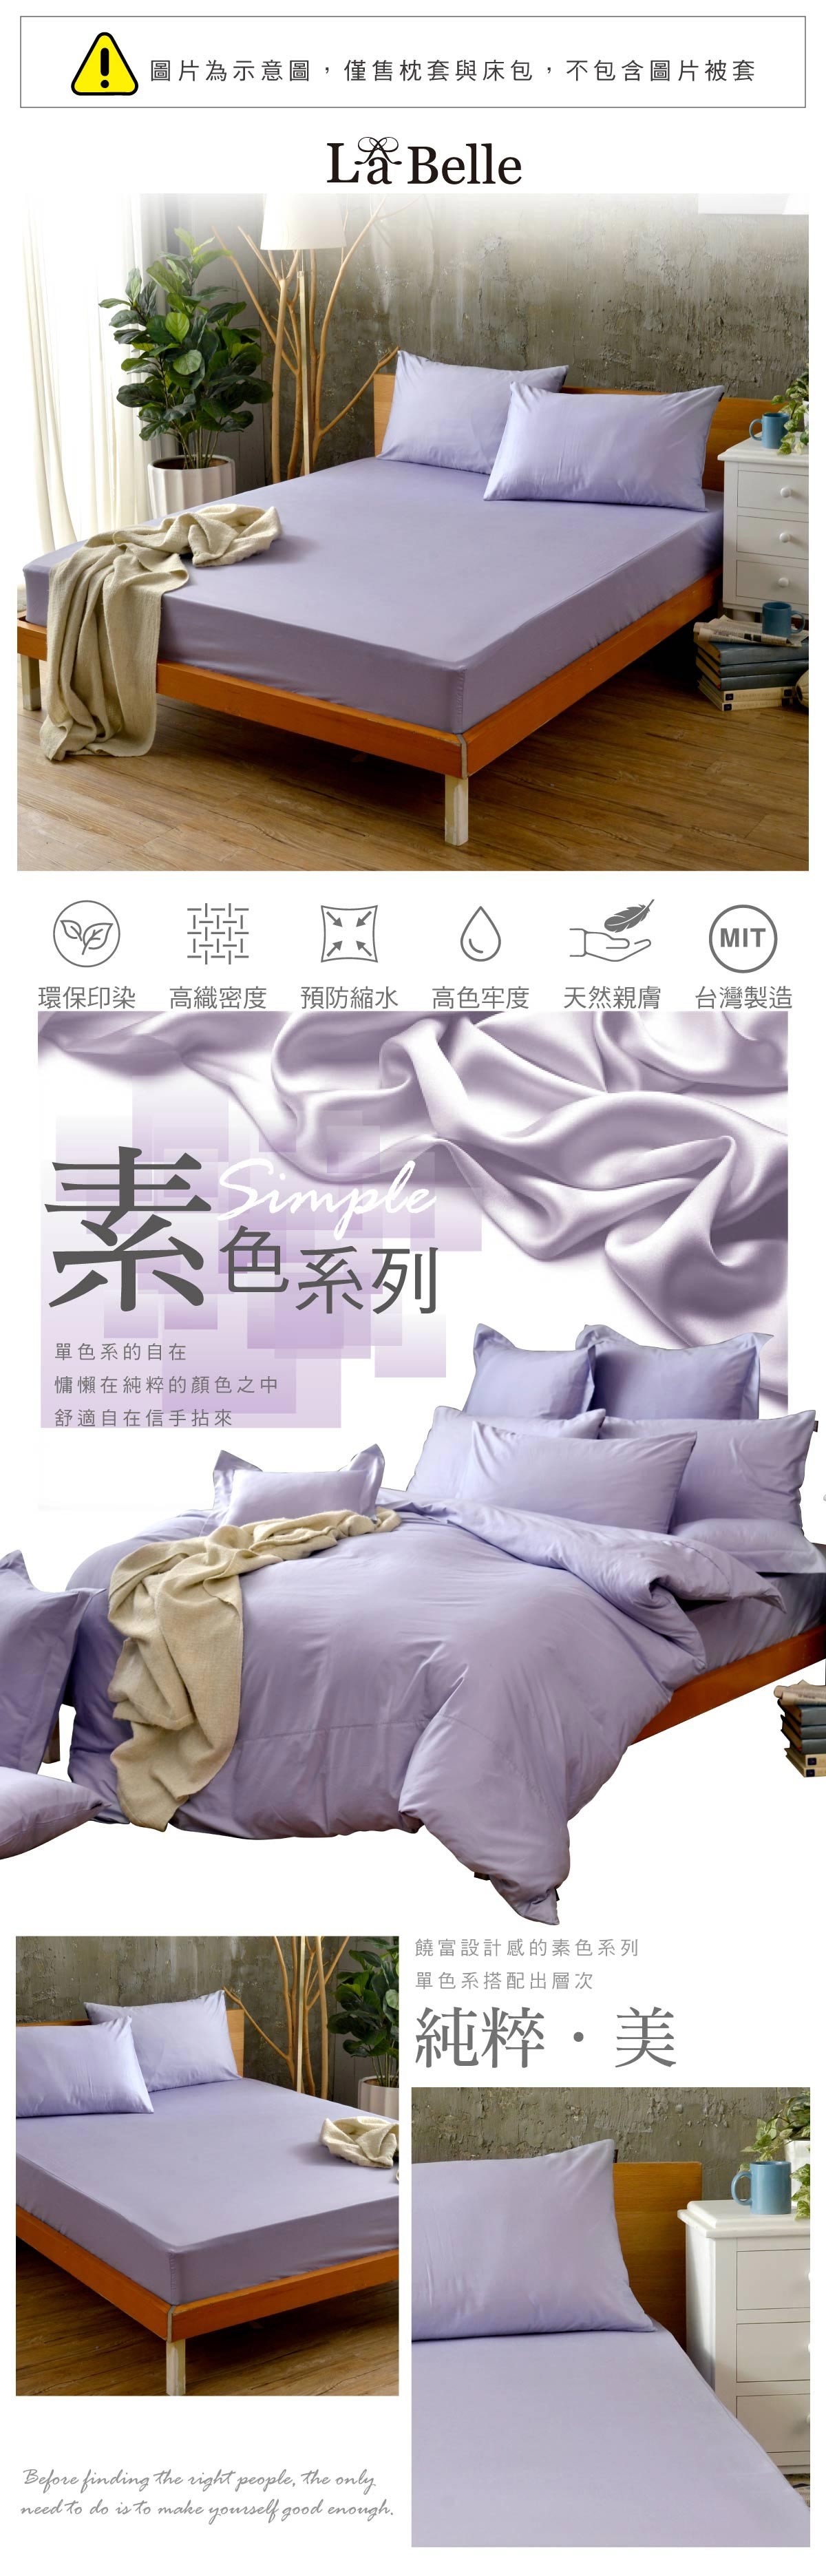 LA BELLE 特大素色床包枕套三件組 紫色，百搭經典配色，簡約素雅好搭配，純棉材質，親膚舒適，布料篩選、設計、生產製造，100%MIT台灣製造。